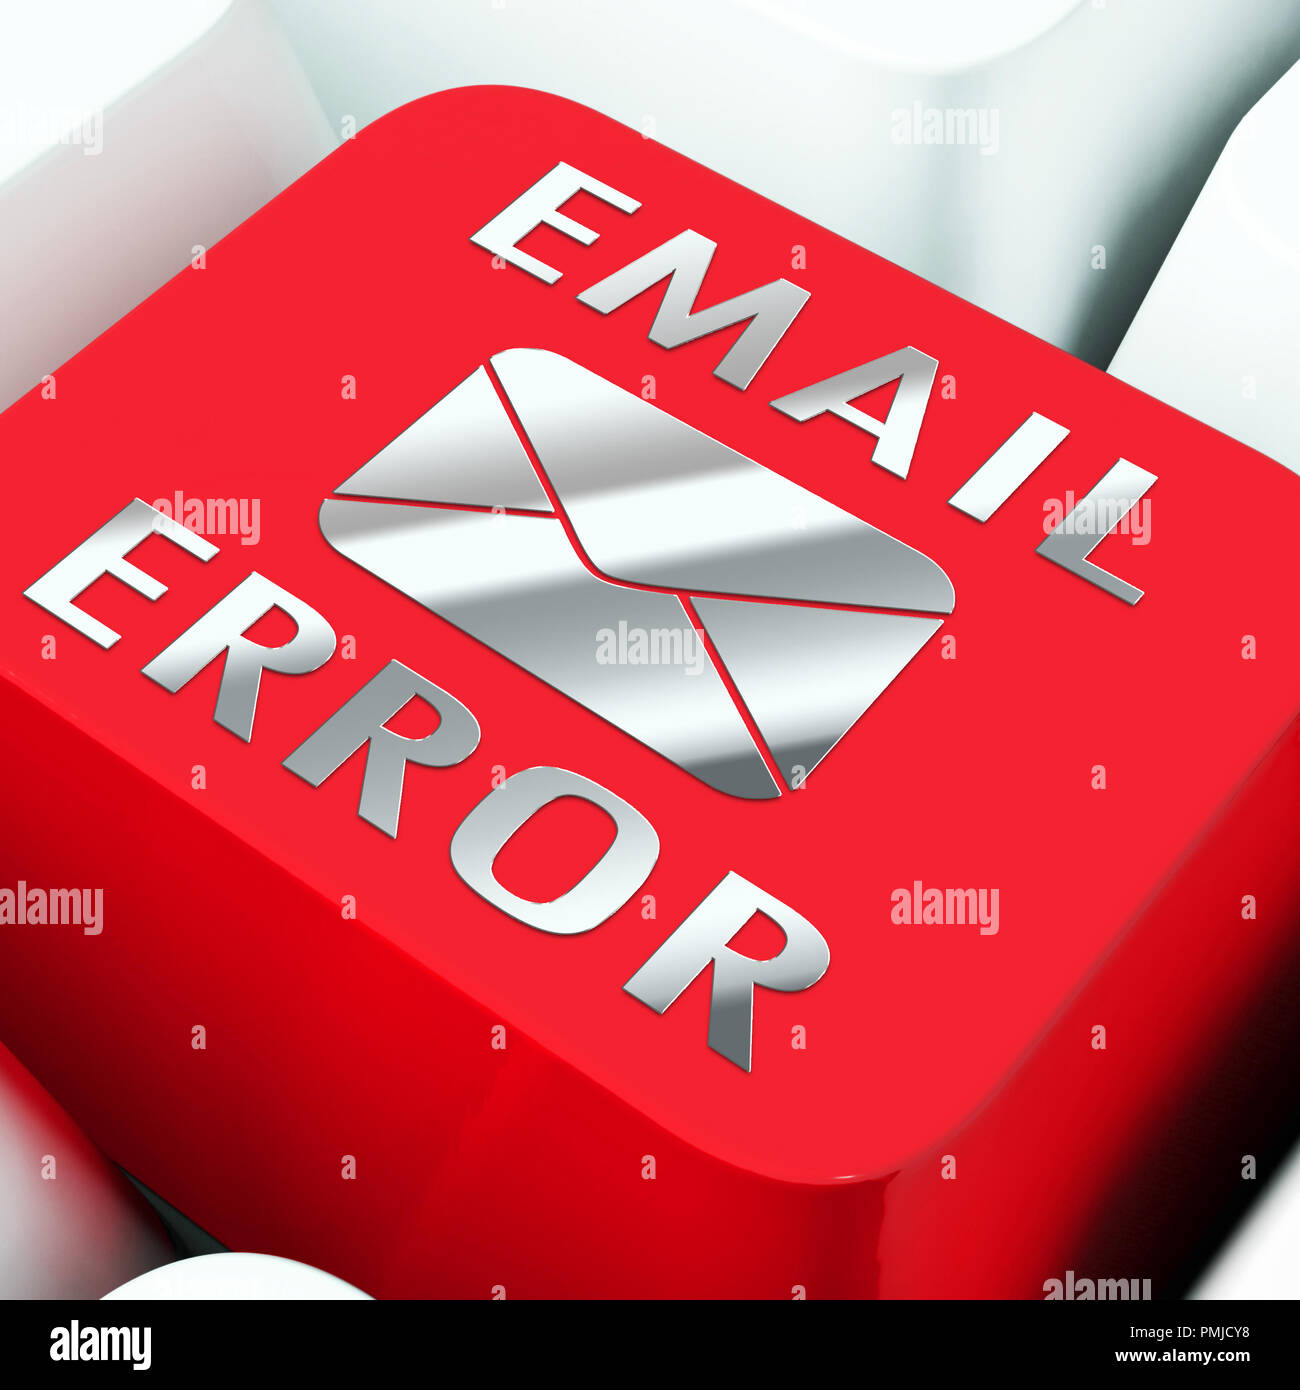 Correo electrónico Enviar error Fail problemas 3D Rendering muestra  incorrecto E-mail advertencia como carta perdida o desastre entrega  Fotografía de stock - Alamy